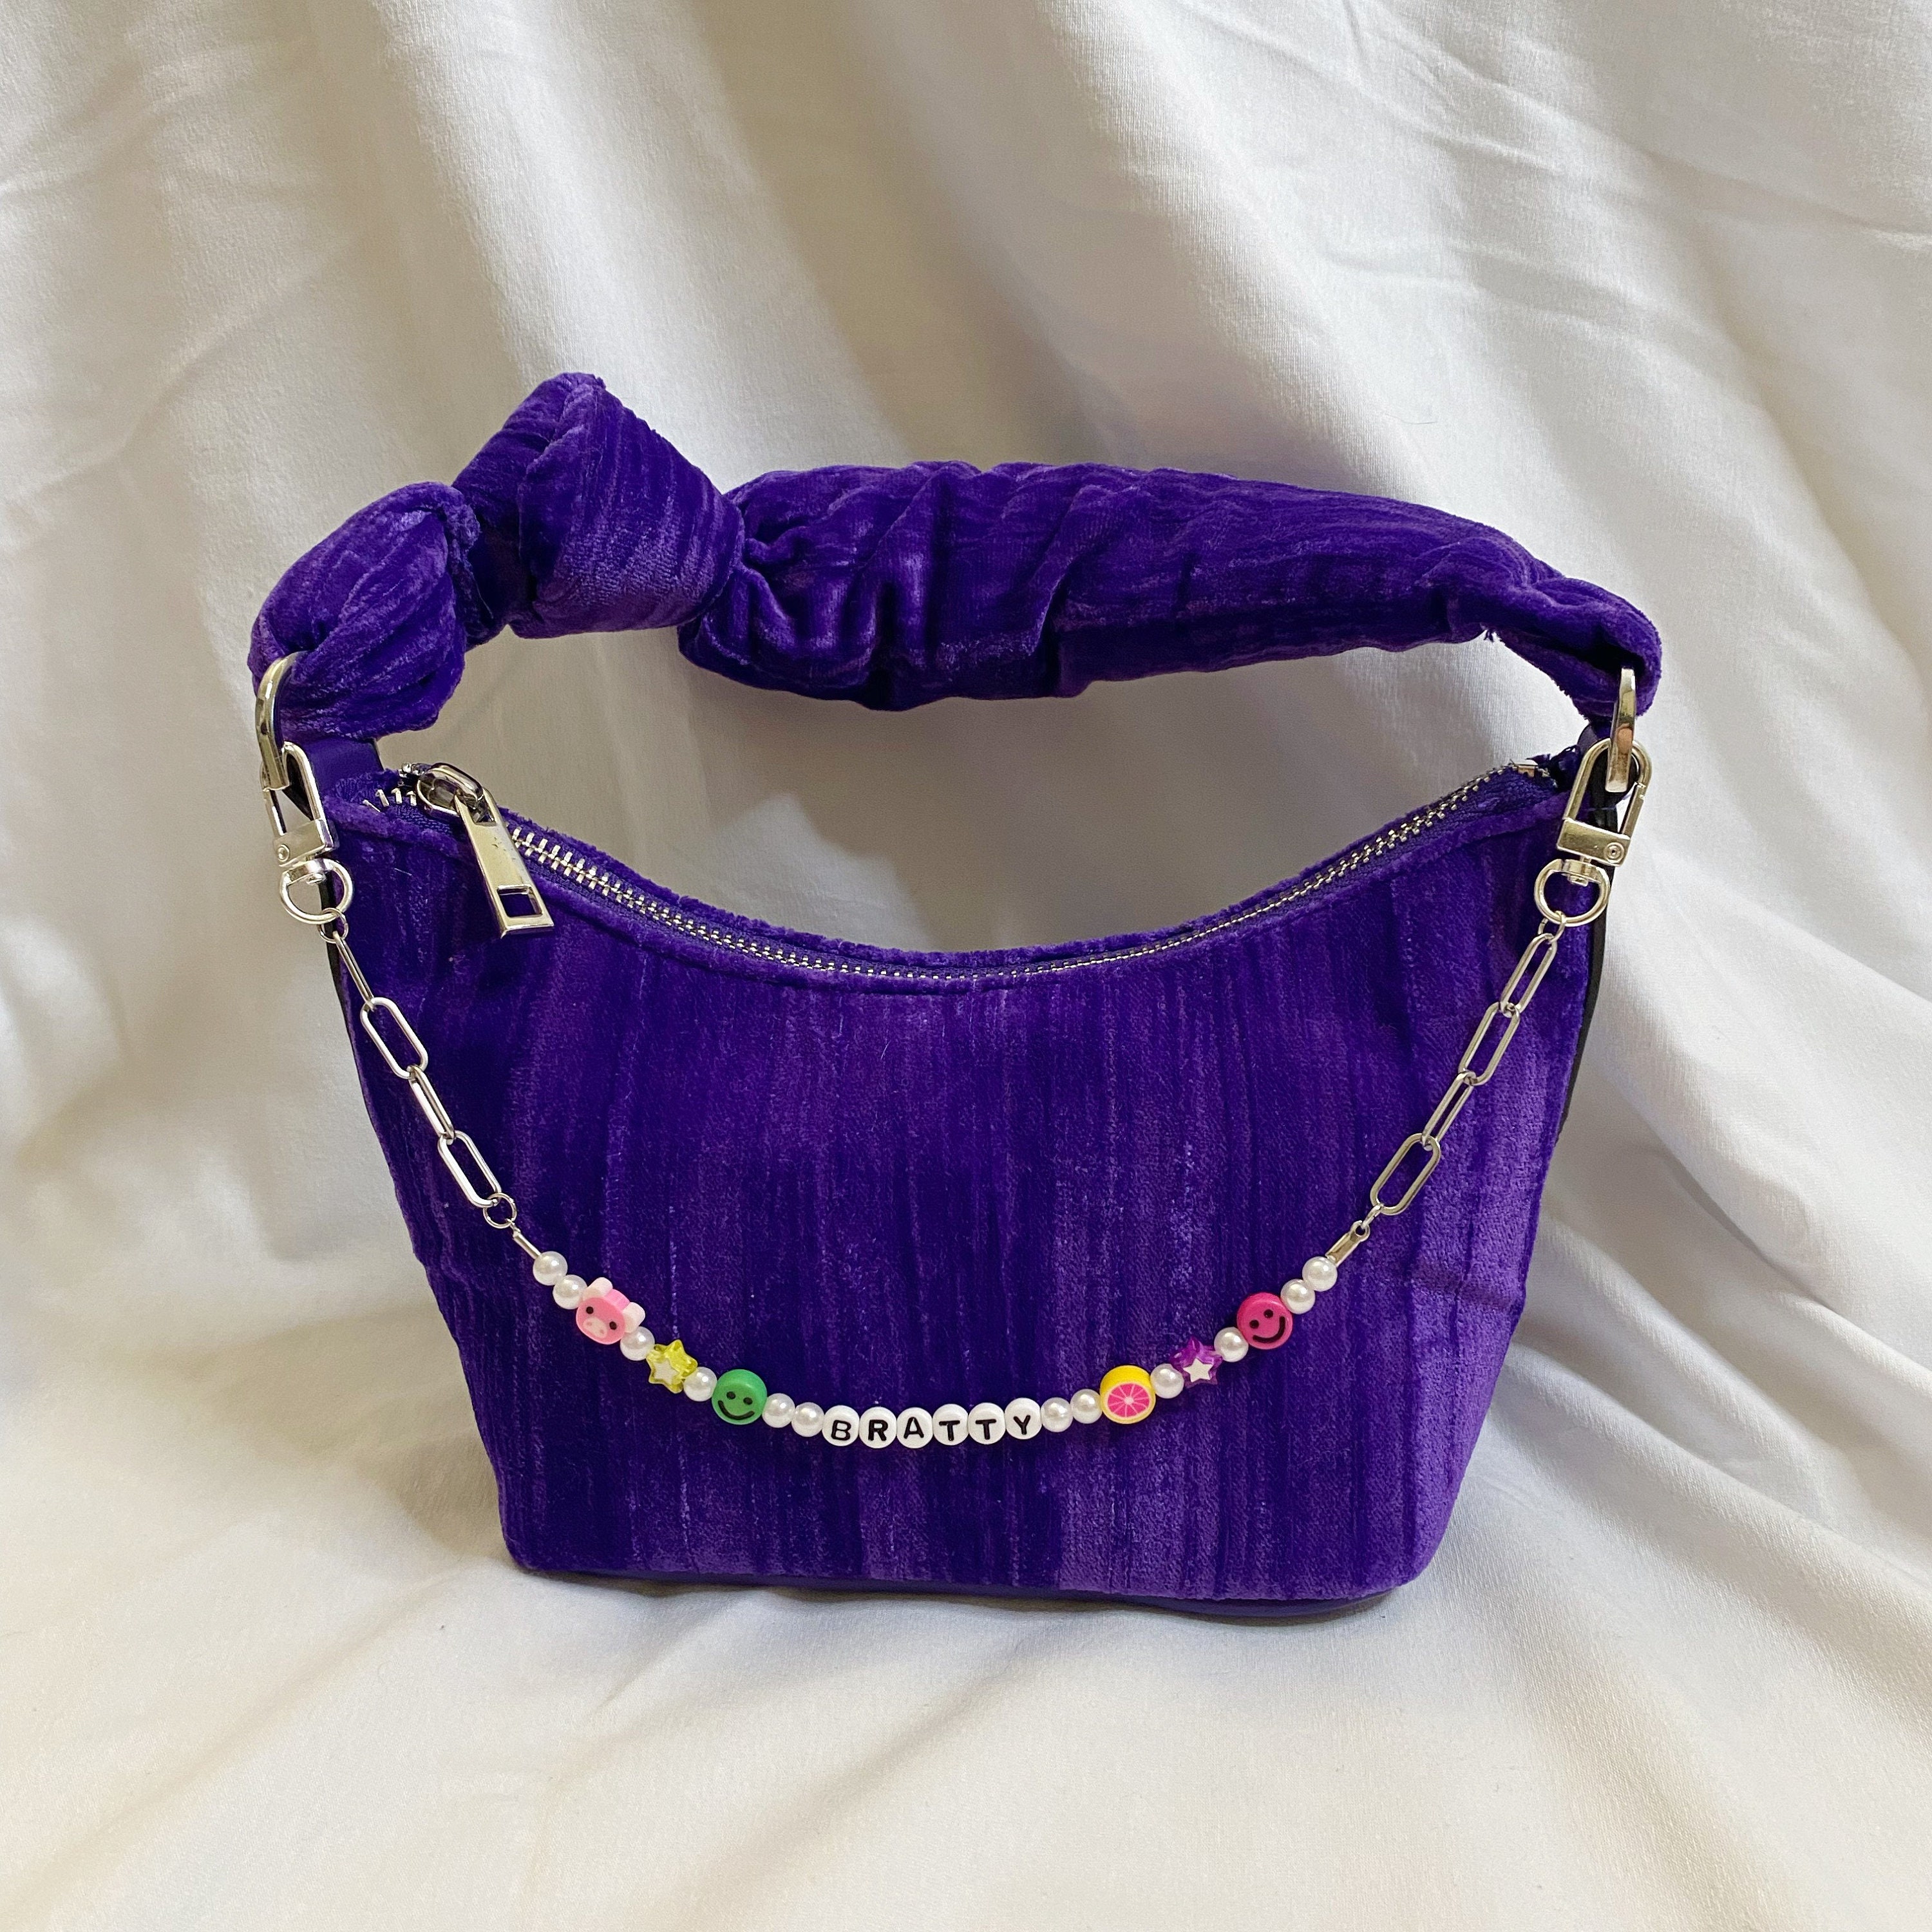 Purchase Wholesale custom purse strap. Free Returns & Net 60 Terms